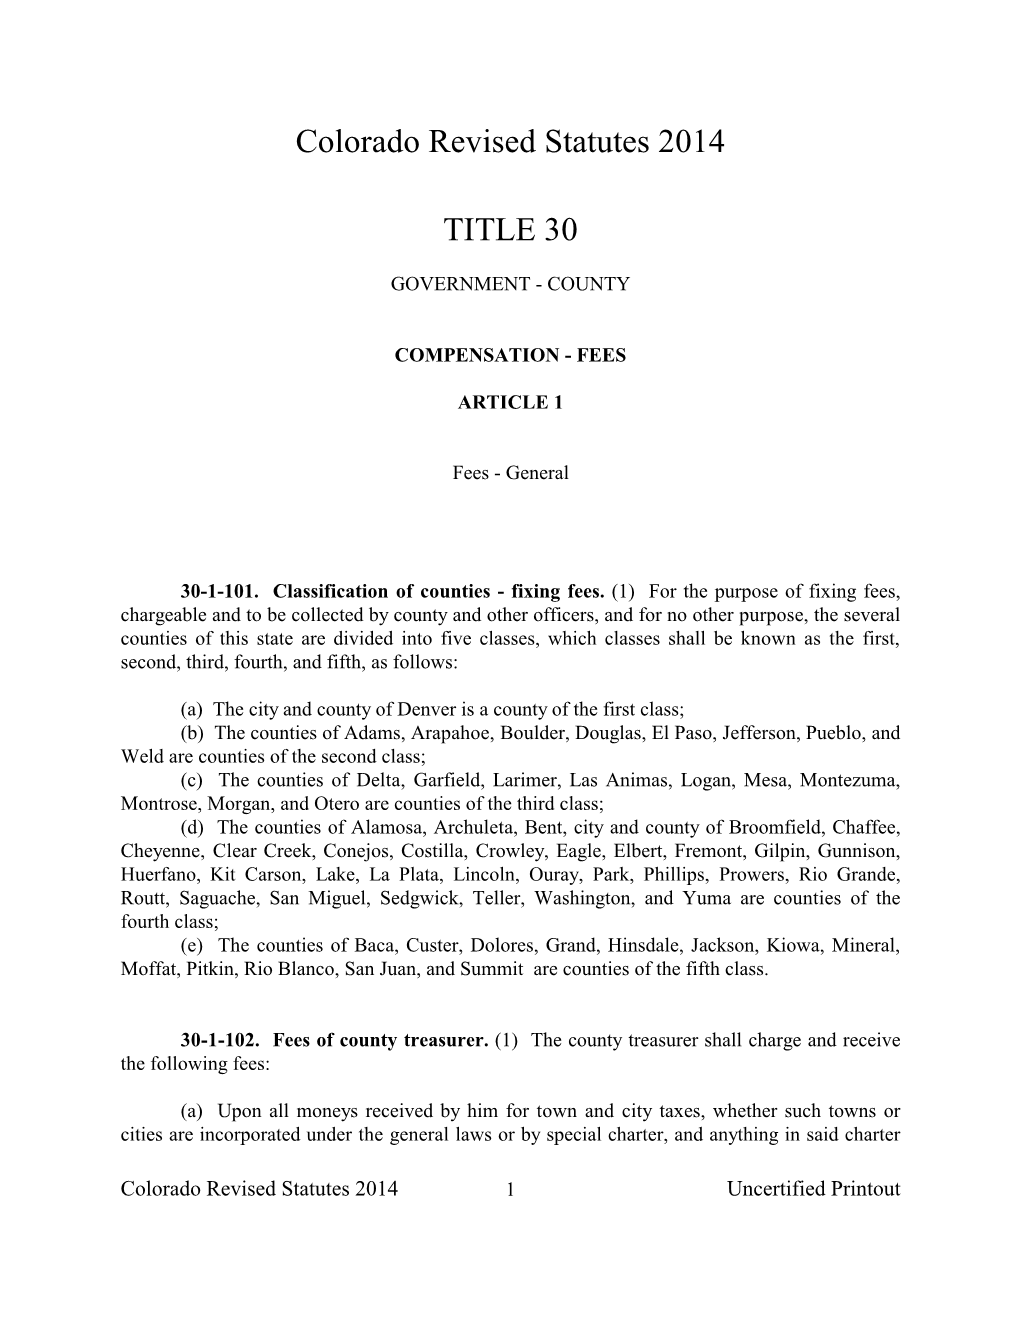 Colorado Revised Statutes 2014 TITLE 30